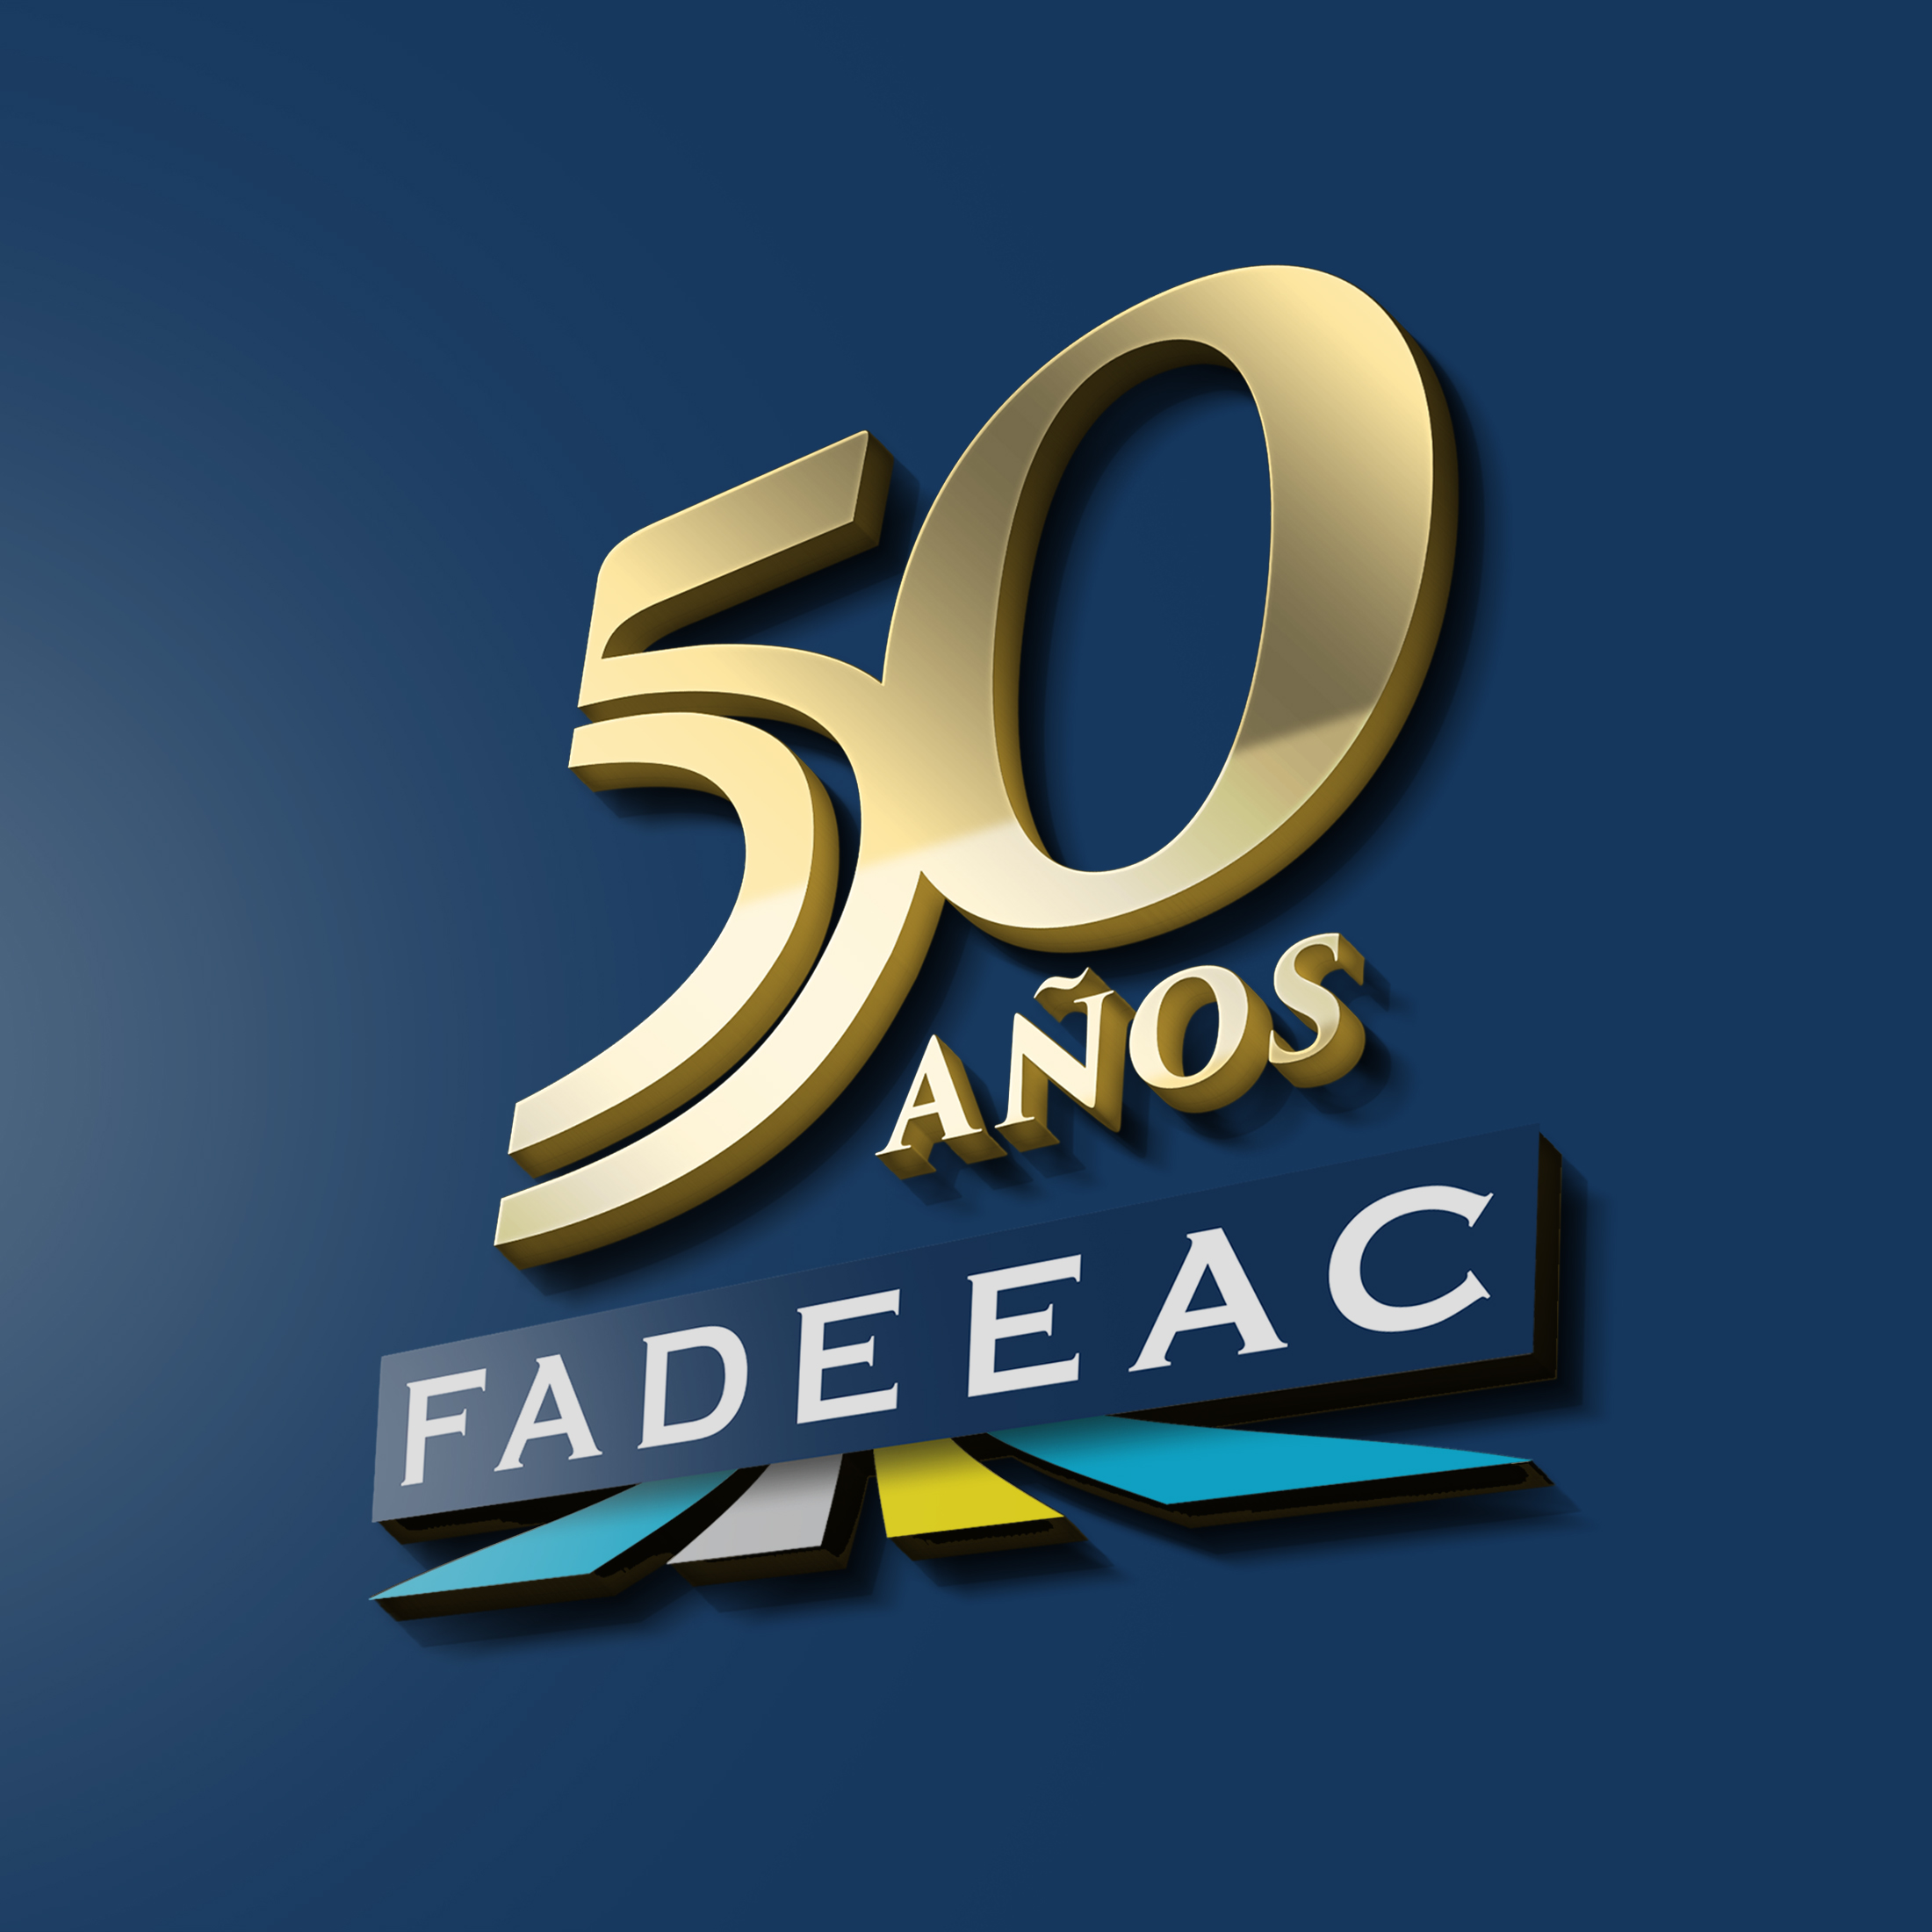 FADEEAC / Argentina / Brochure institucional